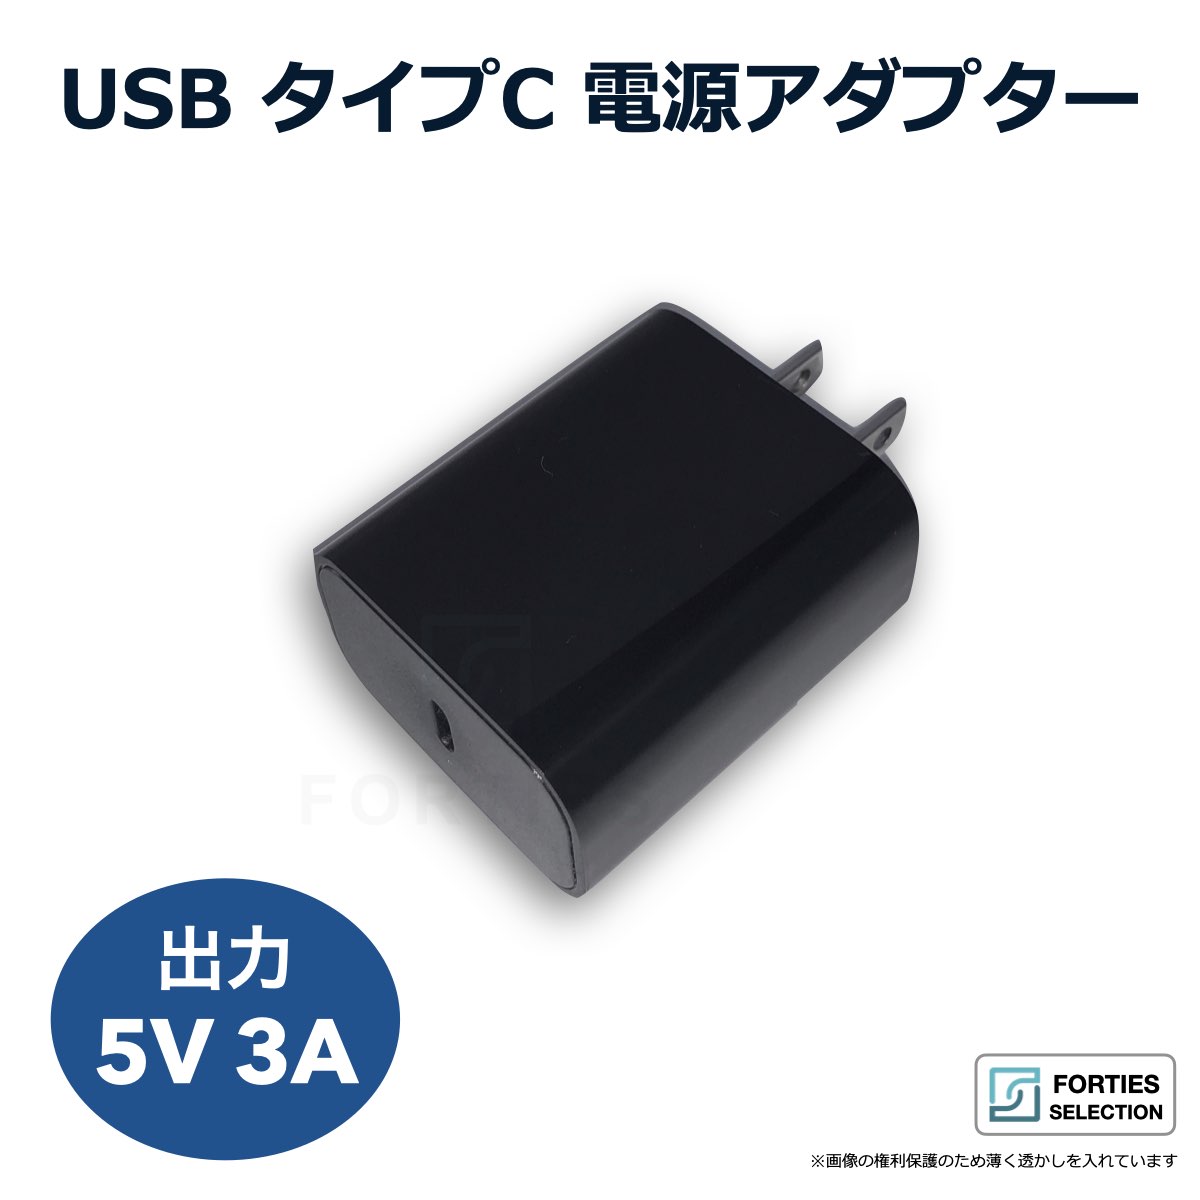 USB電源アダプタ ブラック 5V/3A タイプCコネクタ 電源アダプター ACアダプタ USB Type-C adapter コンセント 5V 3A 15W 100V 240V（黒）